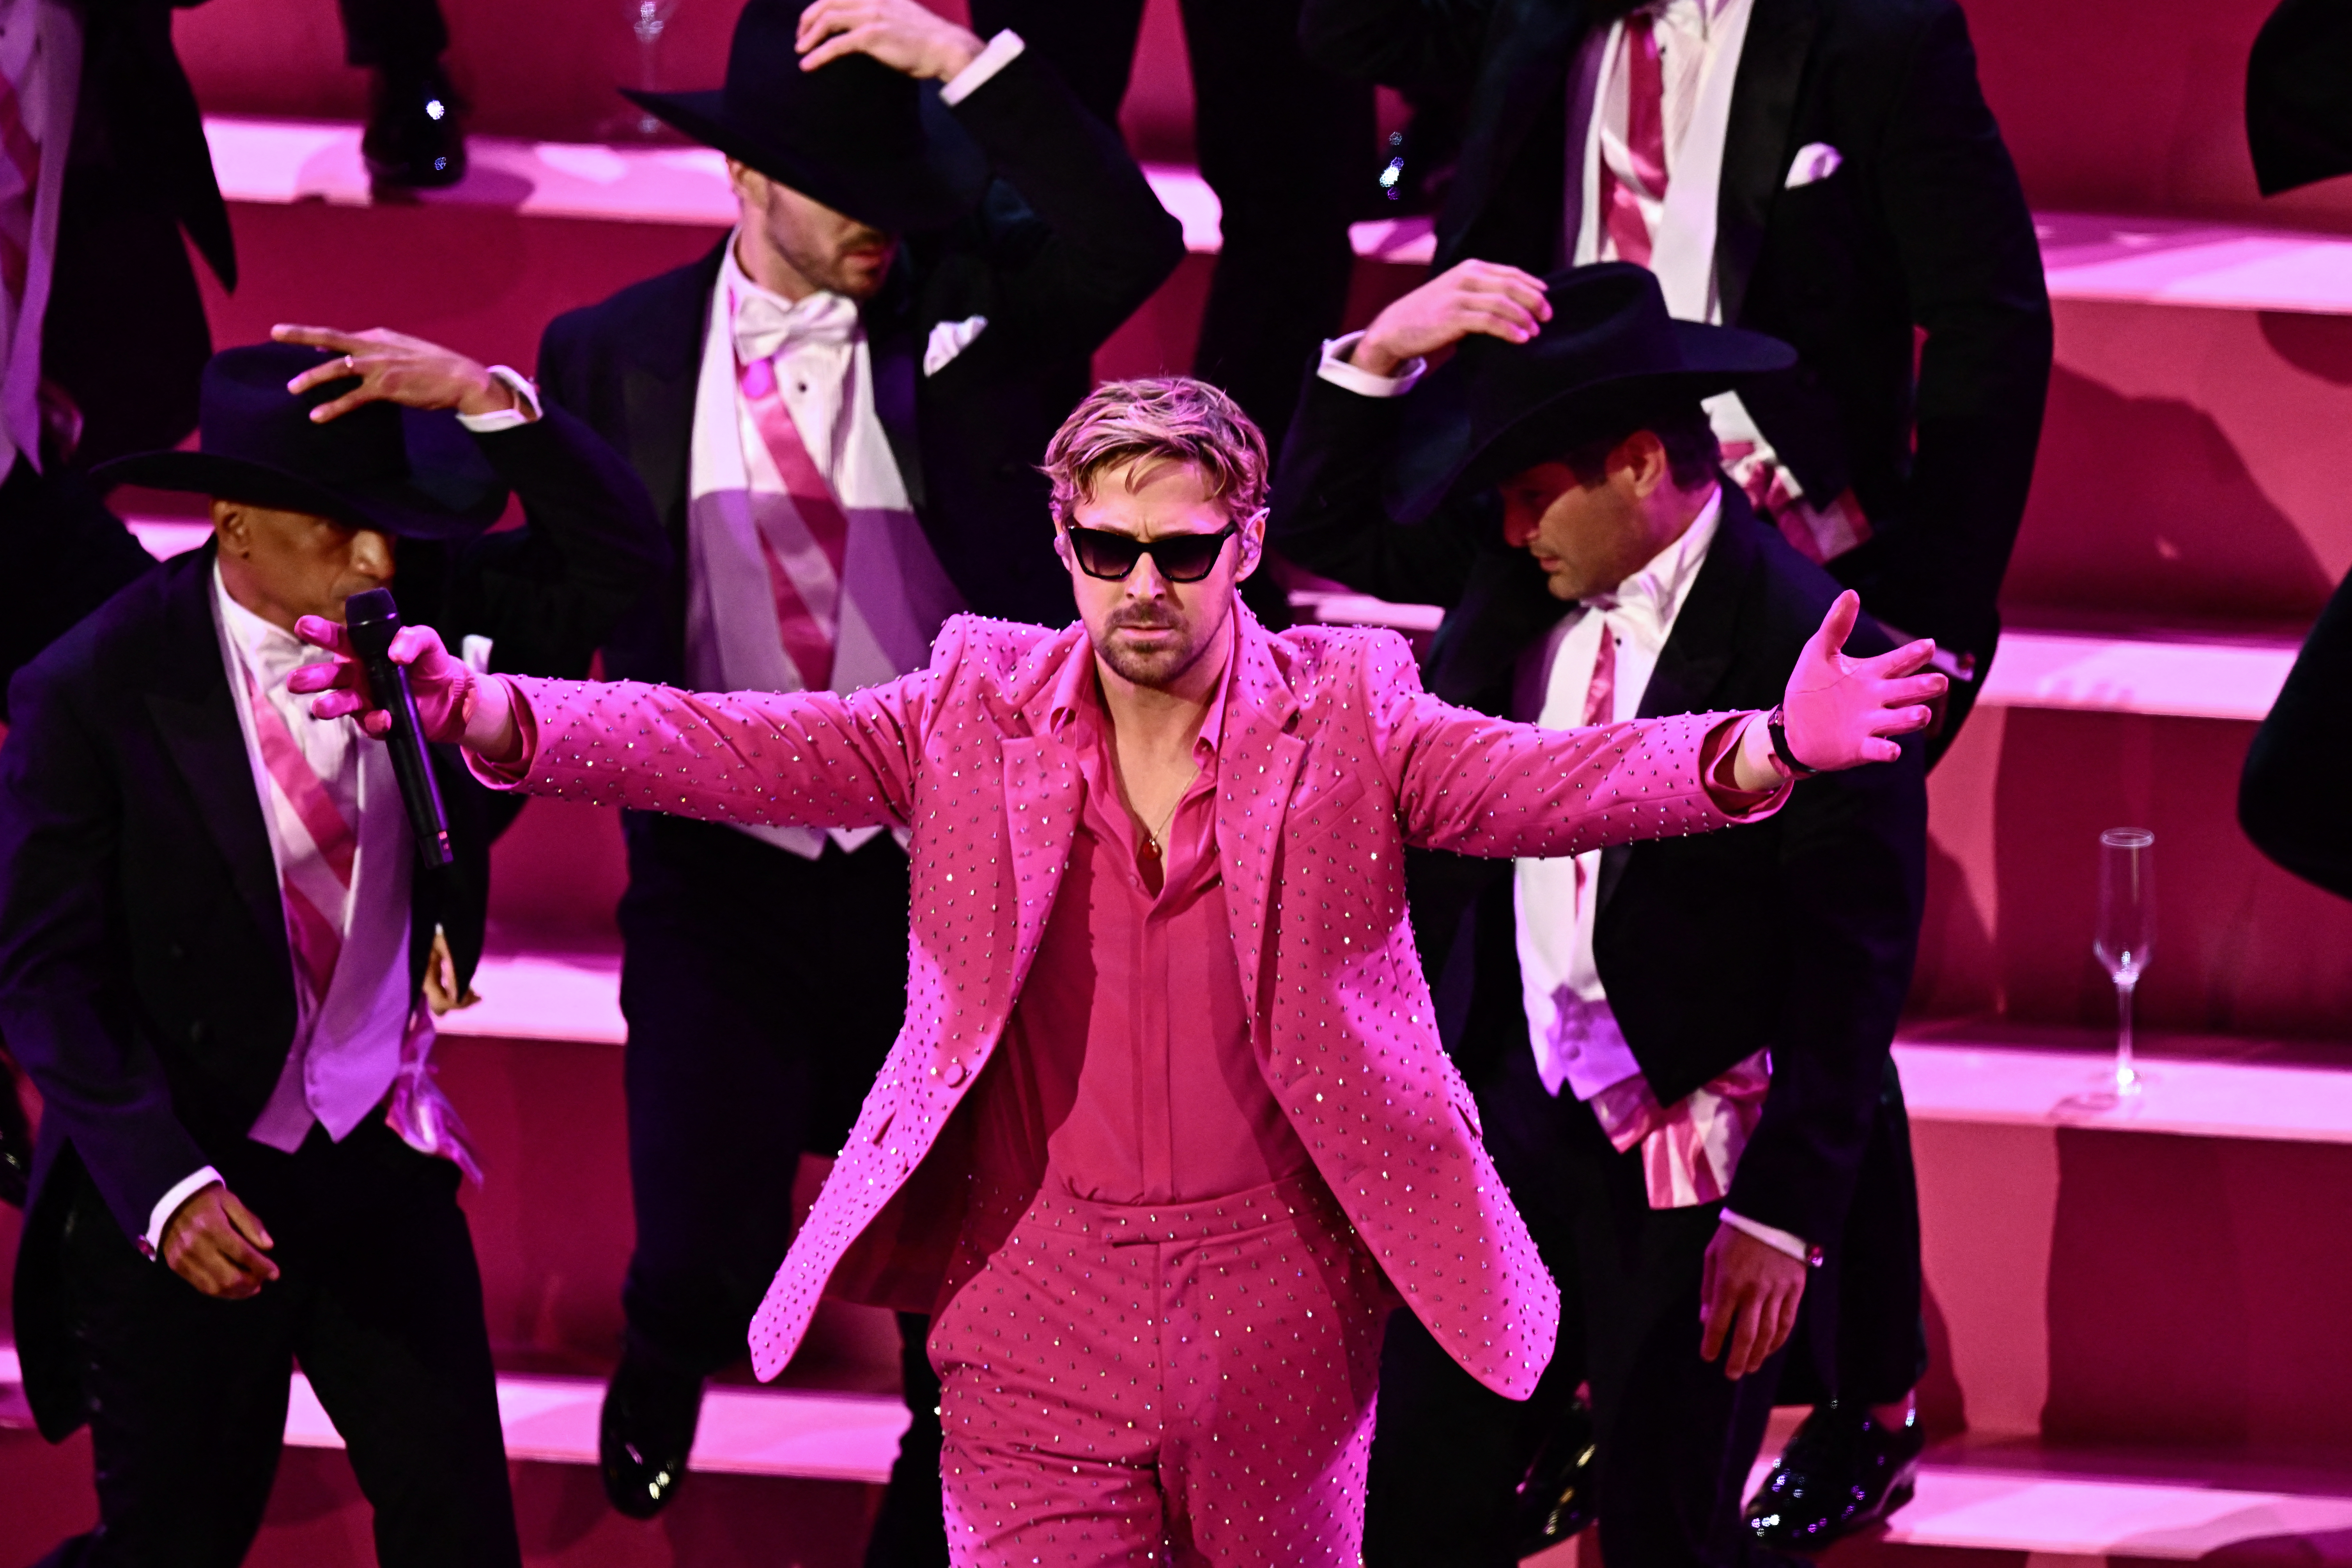 Ryan Gosling performed the Barbie hit I'm Just Ken